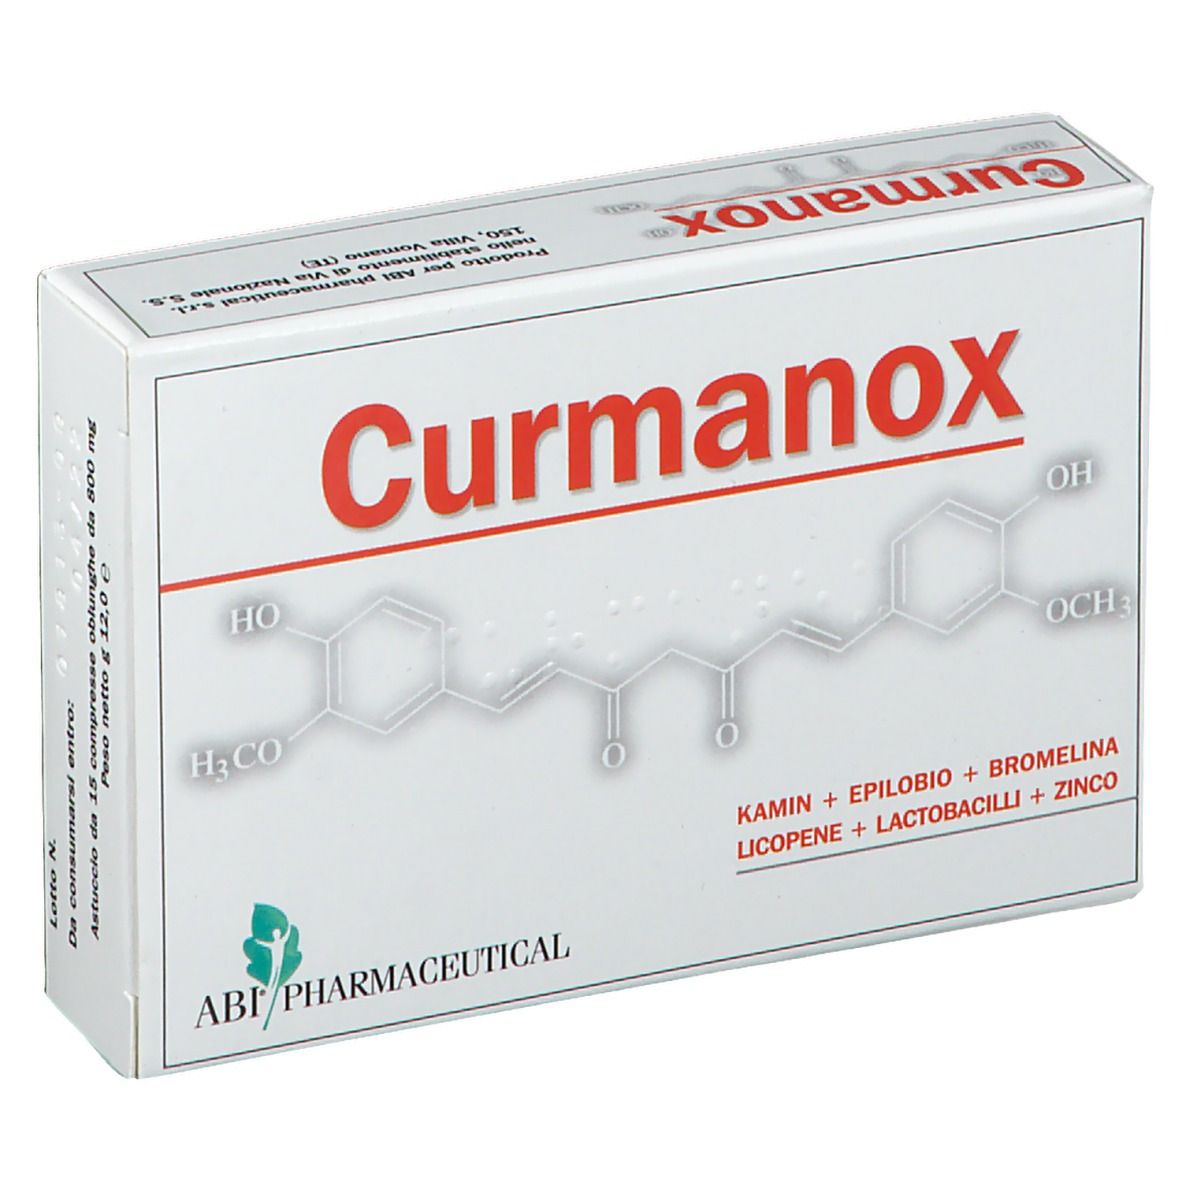 ABI® Pharmaceutical Curmanox